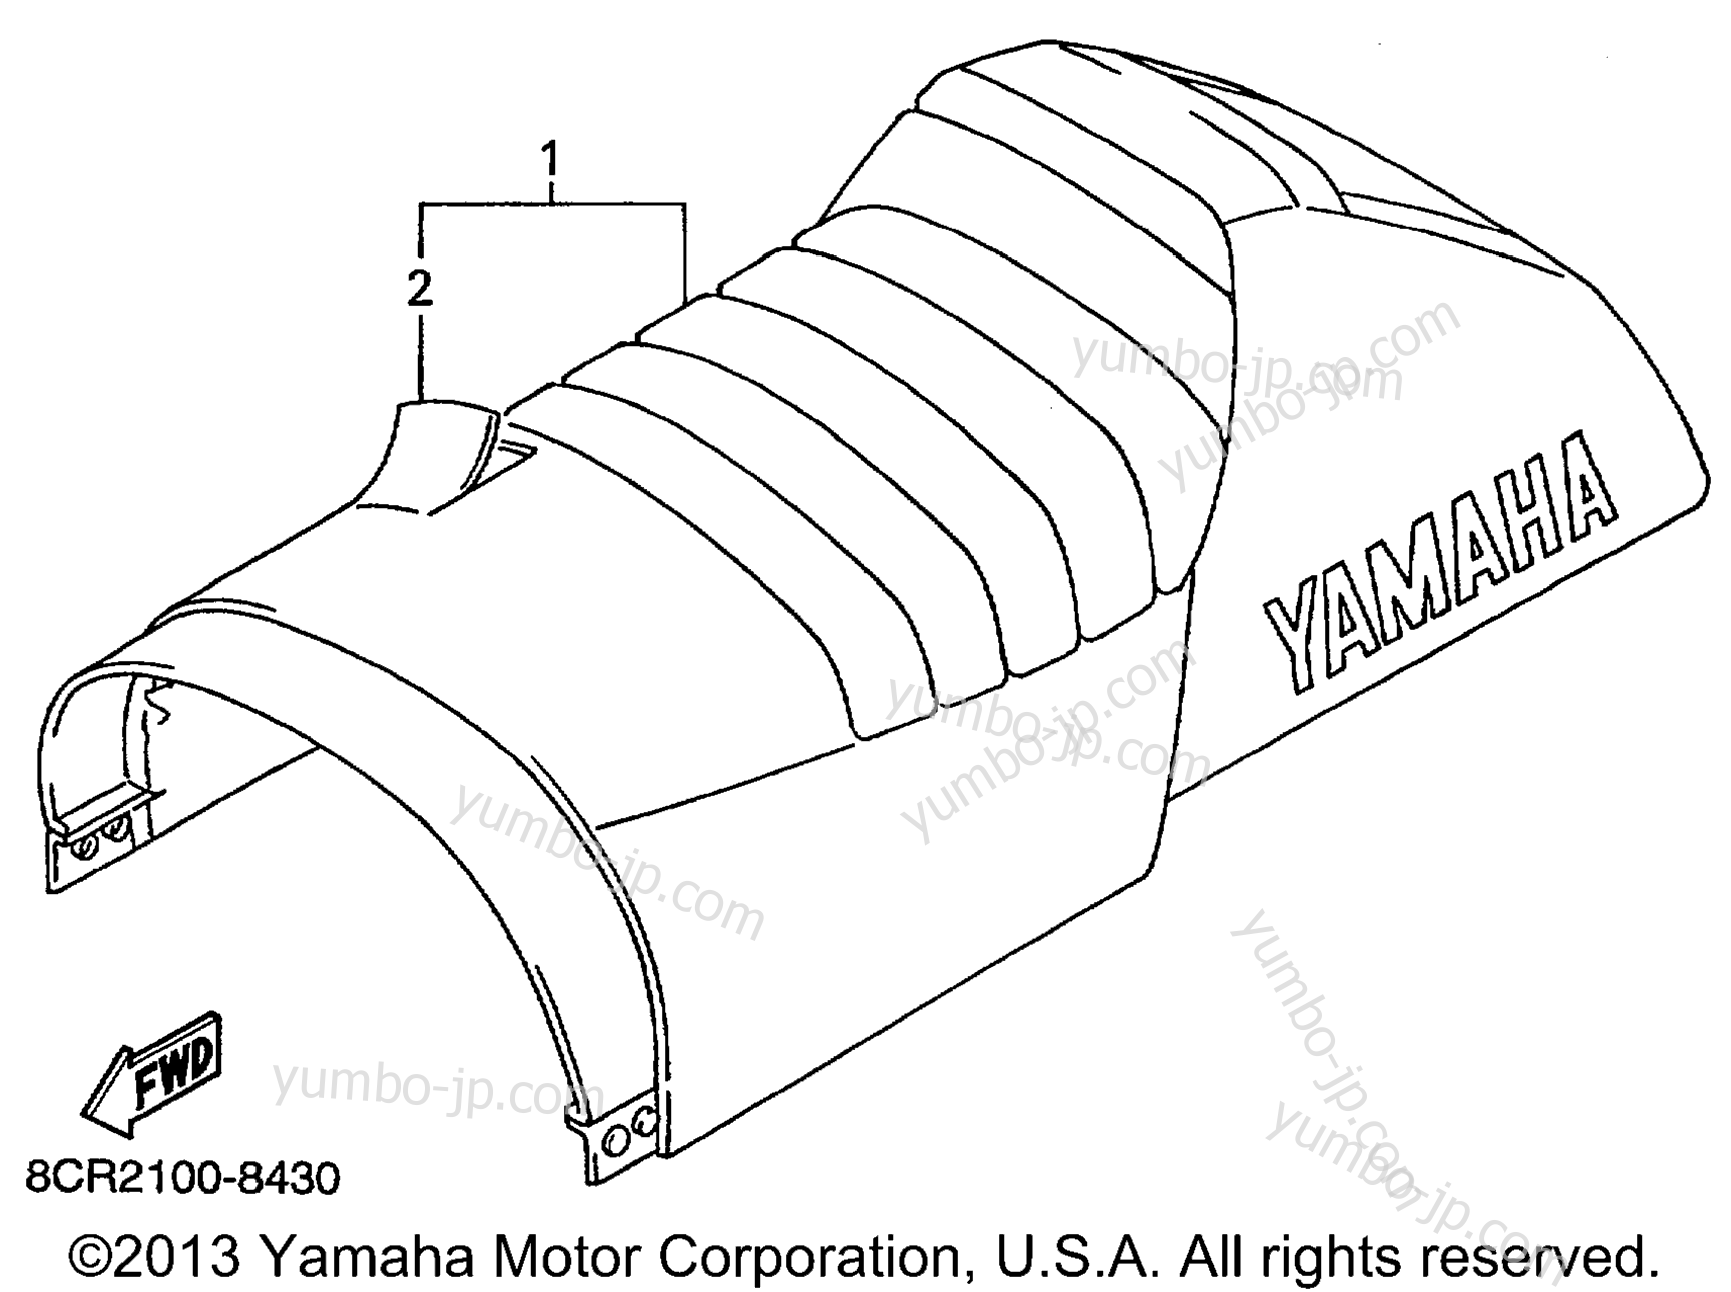 Alternate Body Rig 3 for snowmobiles YAMAHA VMAX 700 DELUXE (ELEC START) (VX700ERC) 1999 year